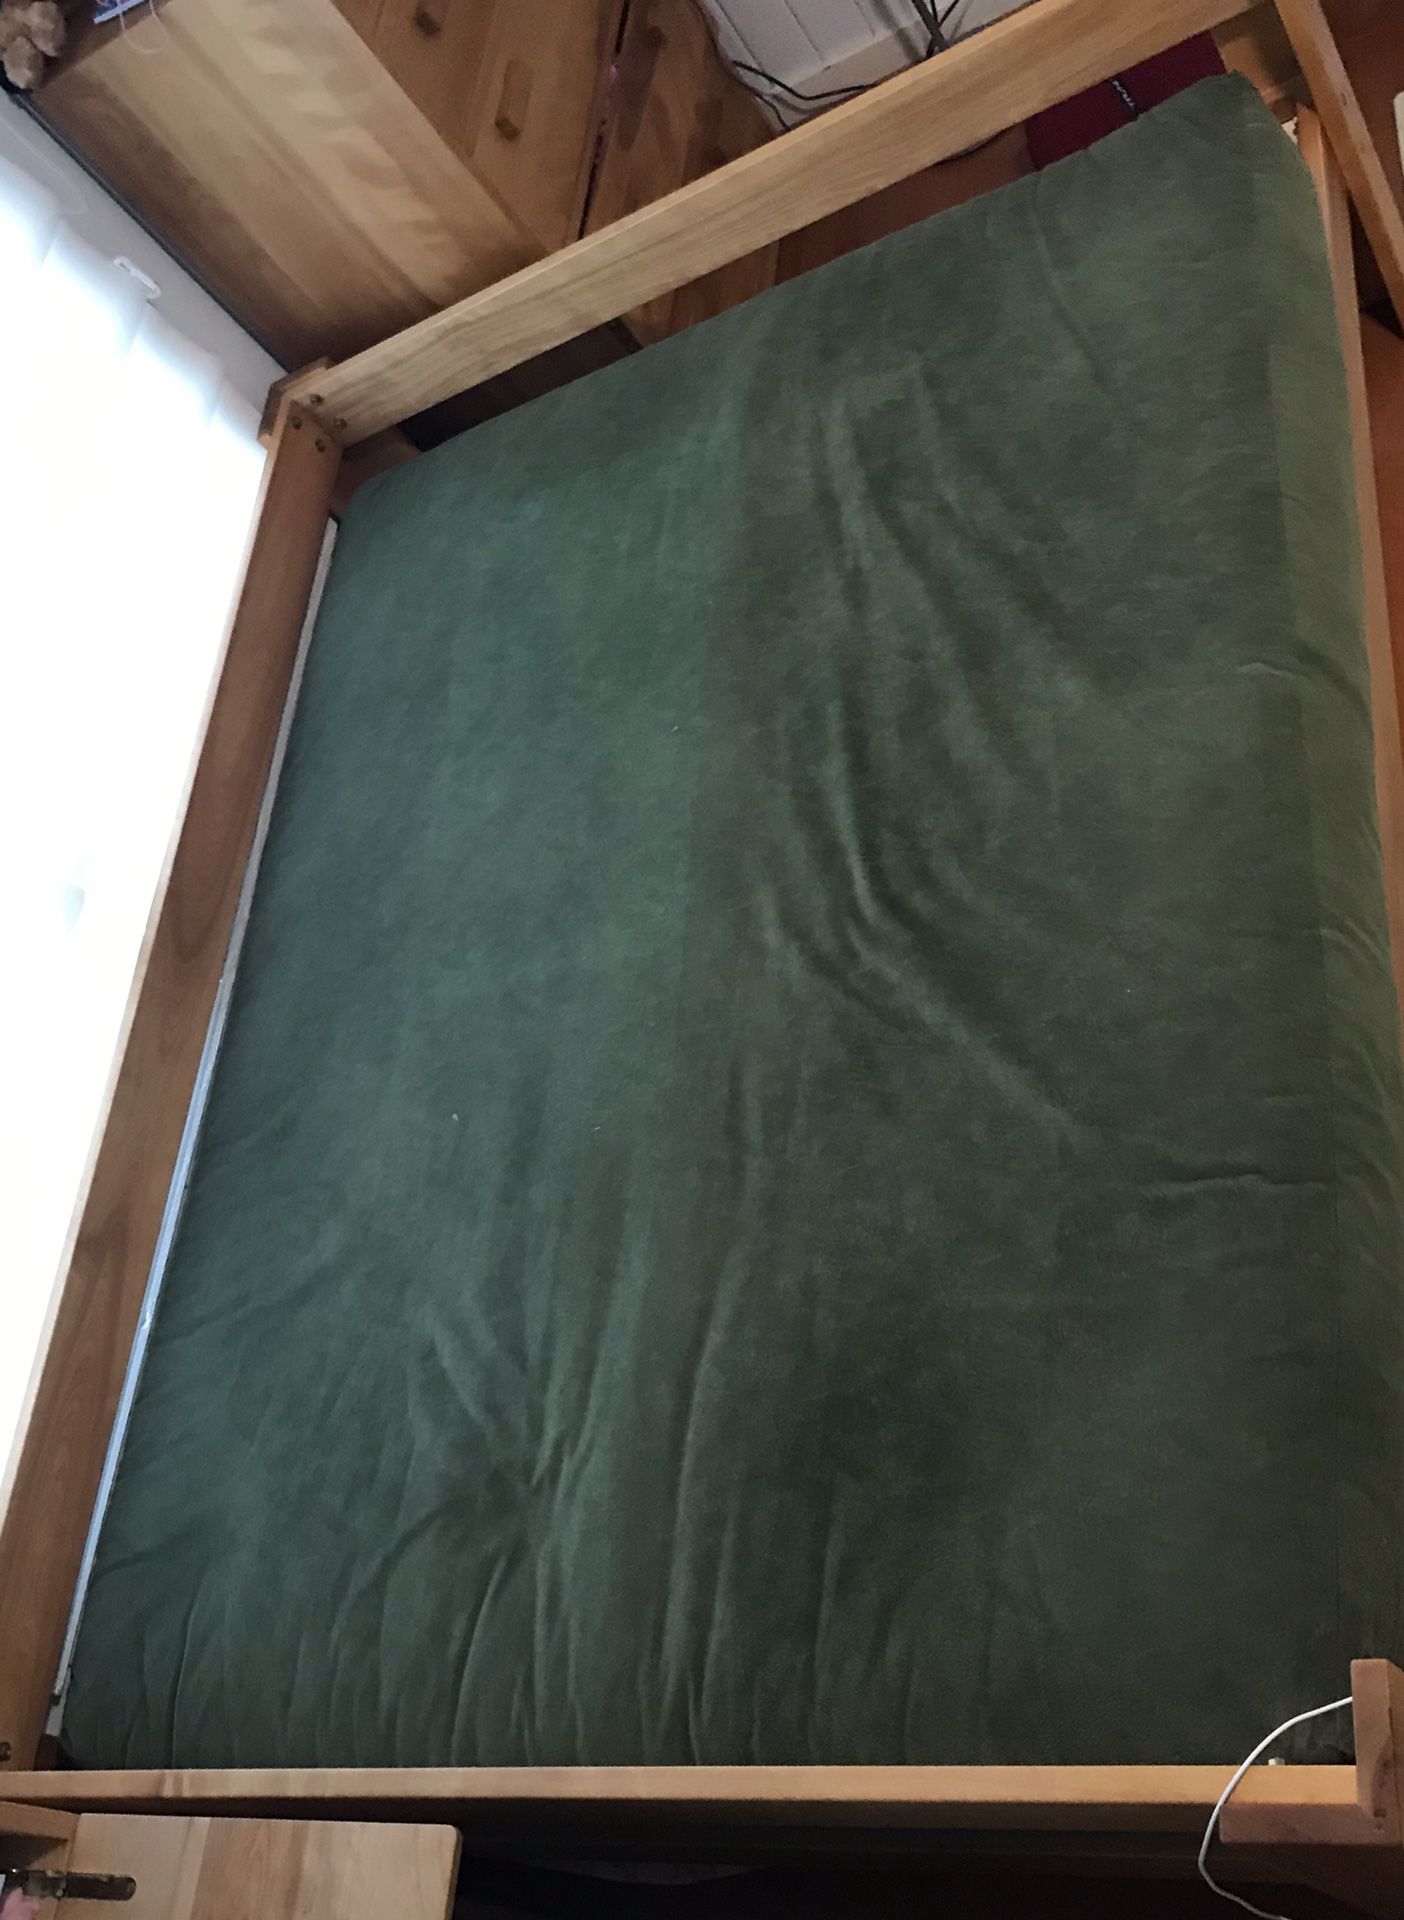 Full size futon mattress